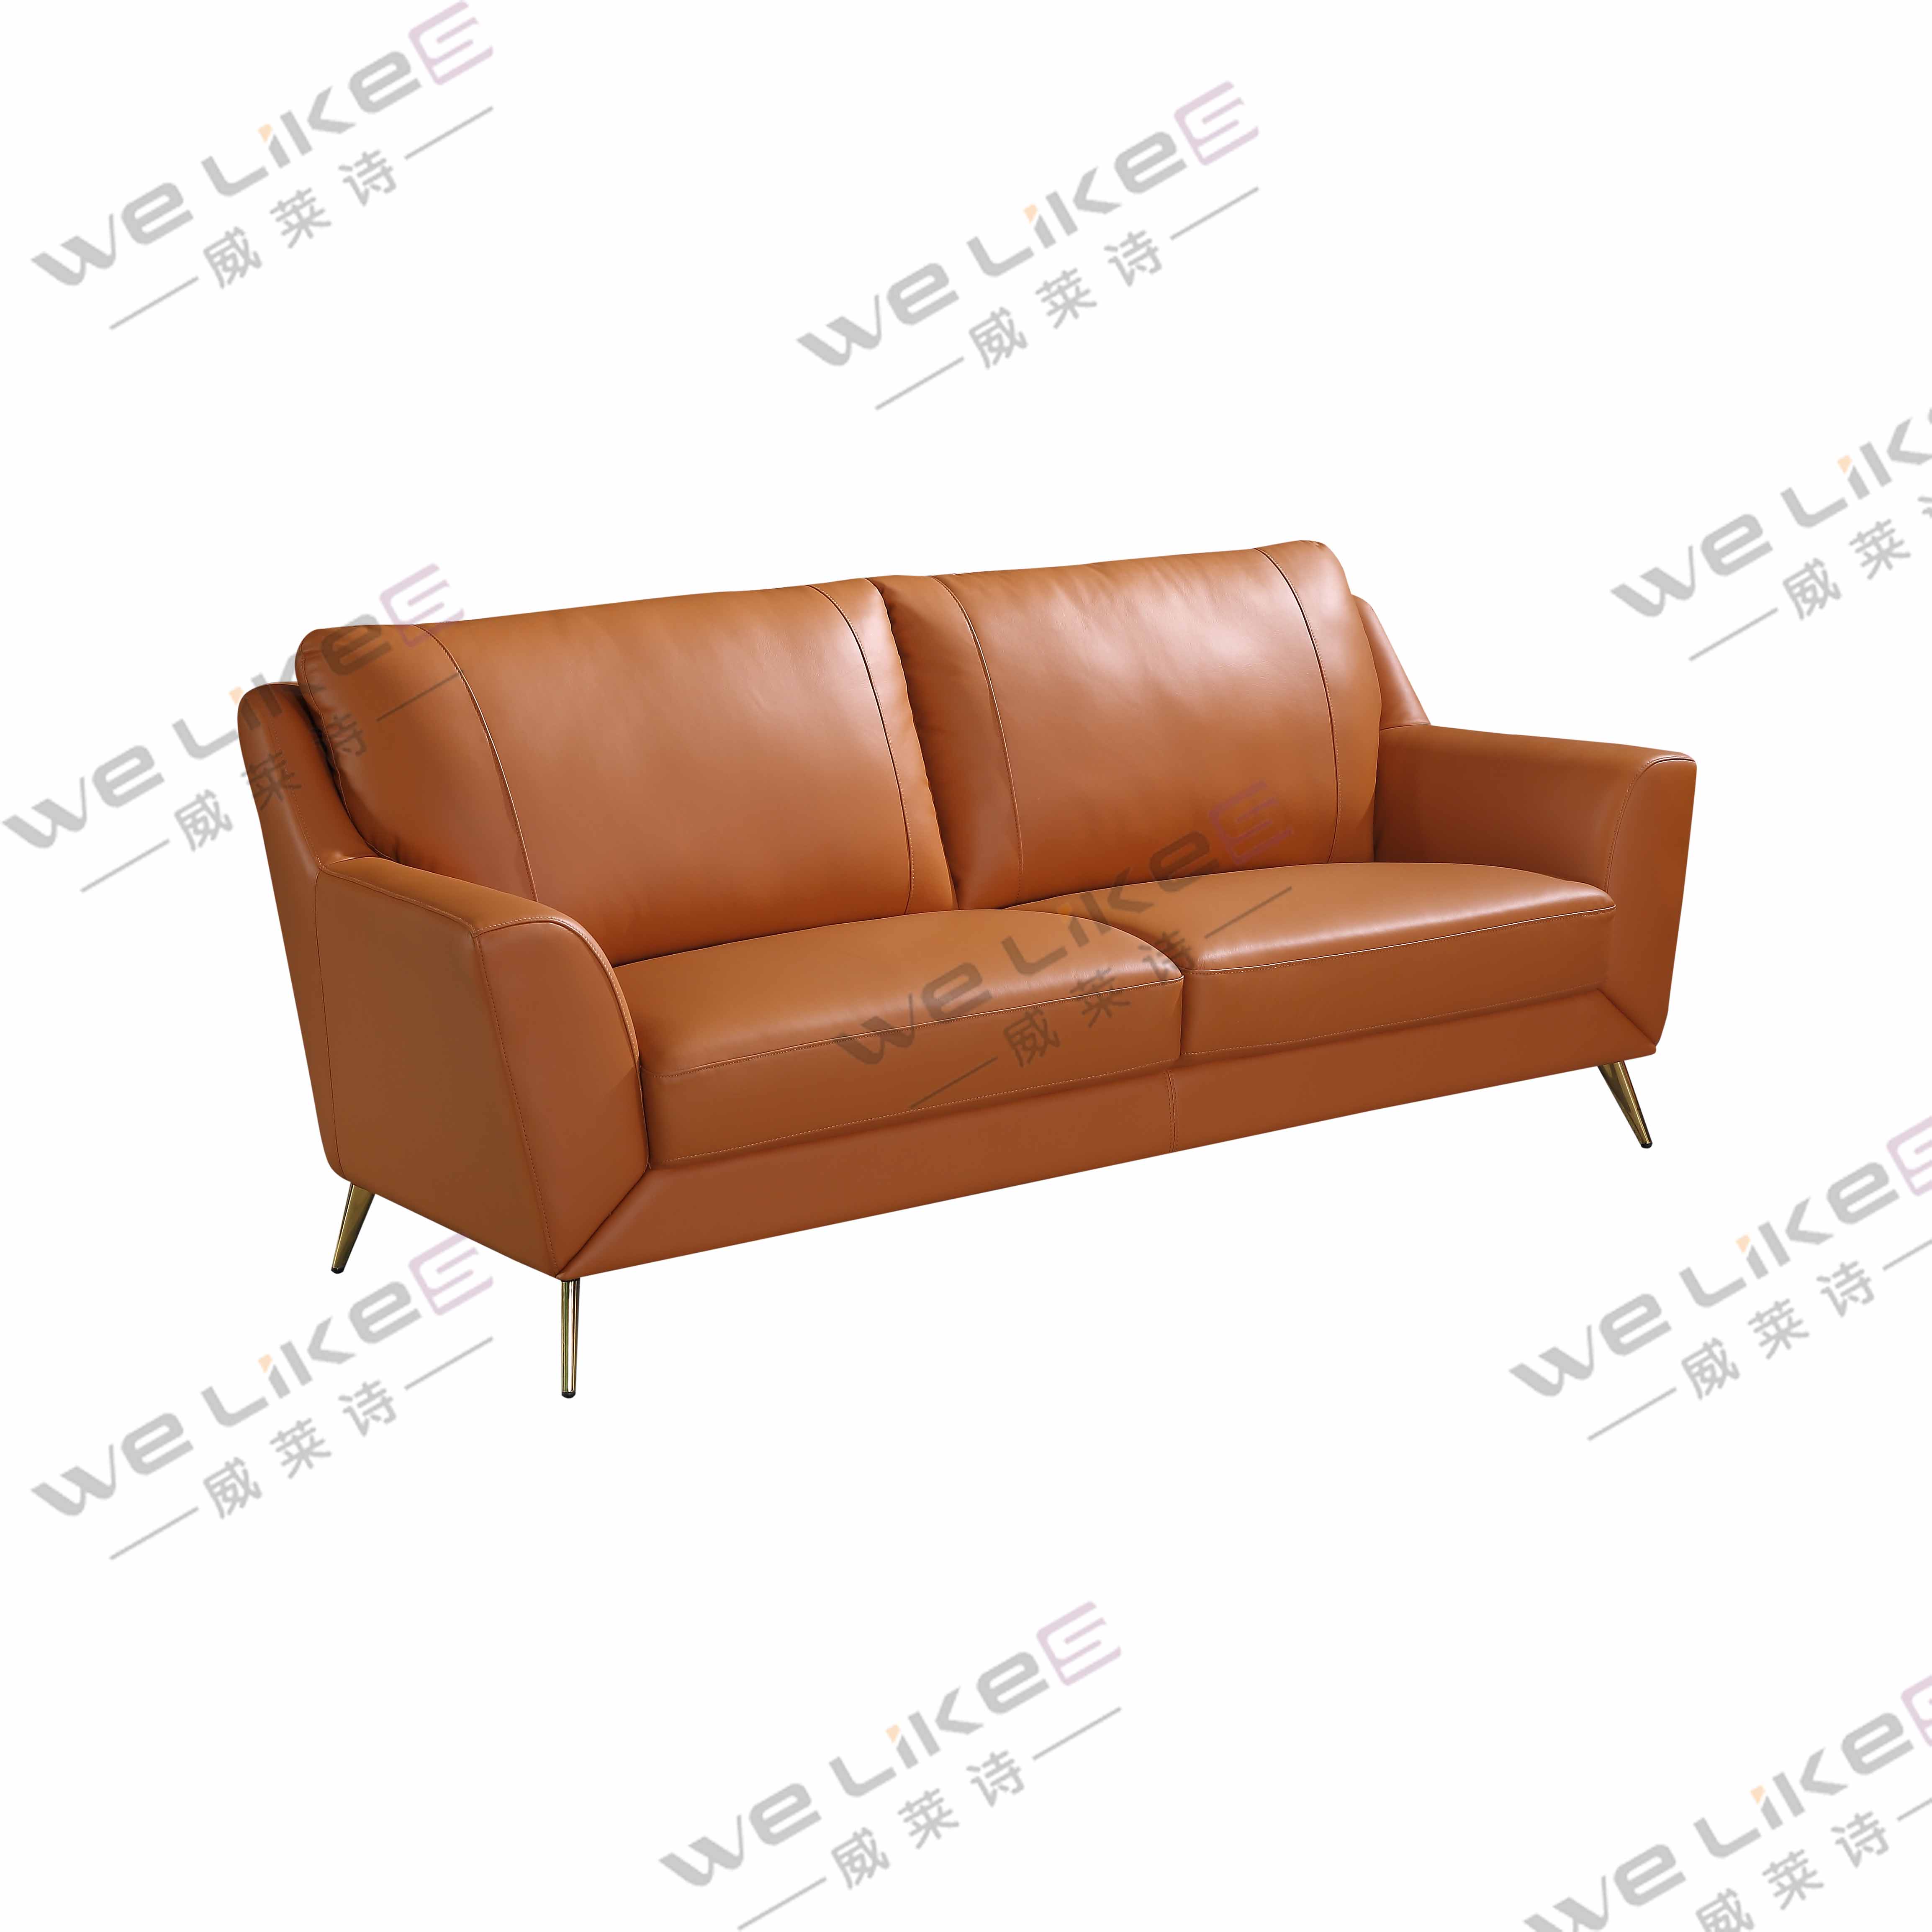 ZM806 Welikes Modern Leather Sofa